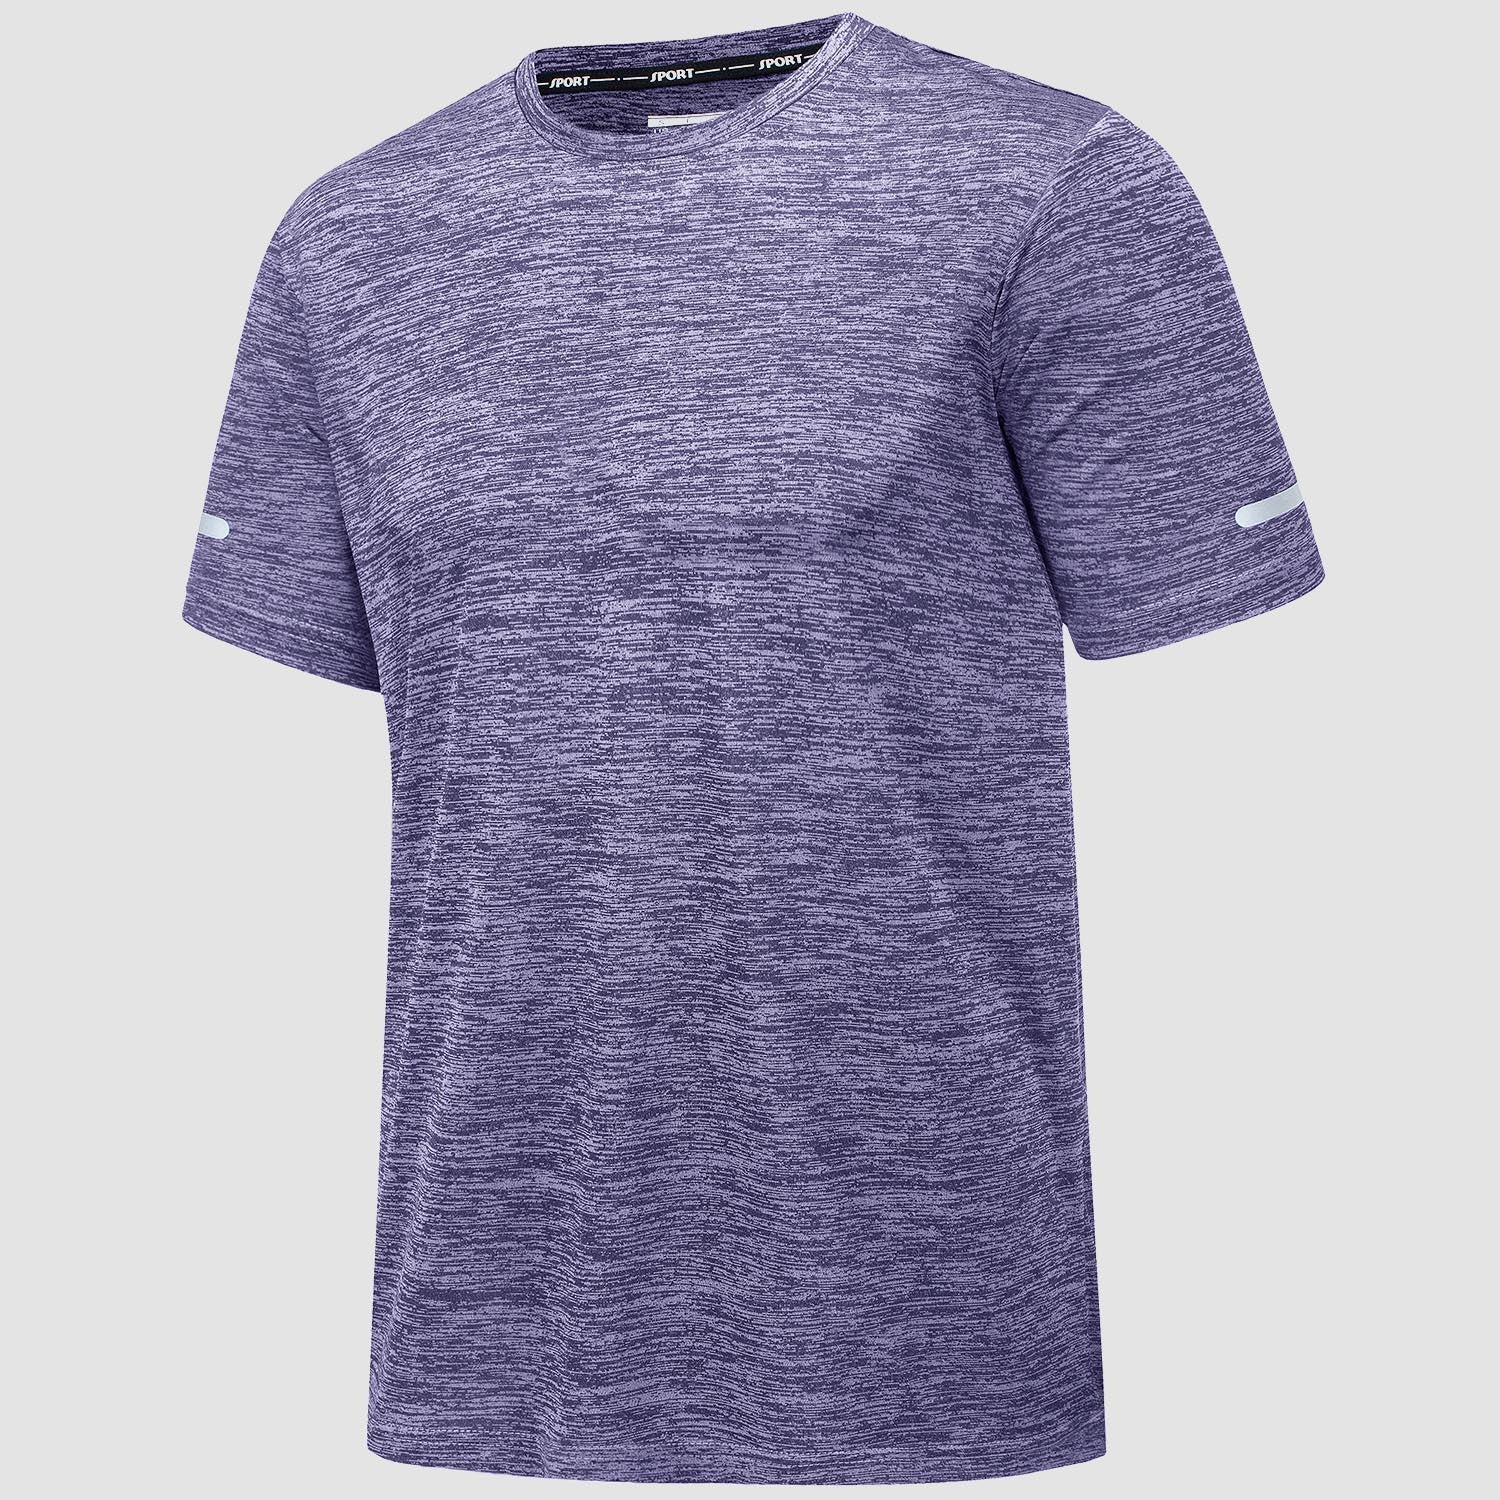 Men's T-Shirt Tagless Quick Dry Athletic Running Shirts Performance Tee